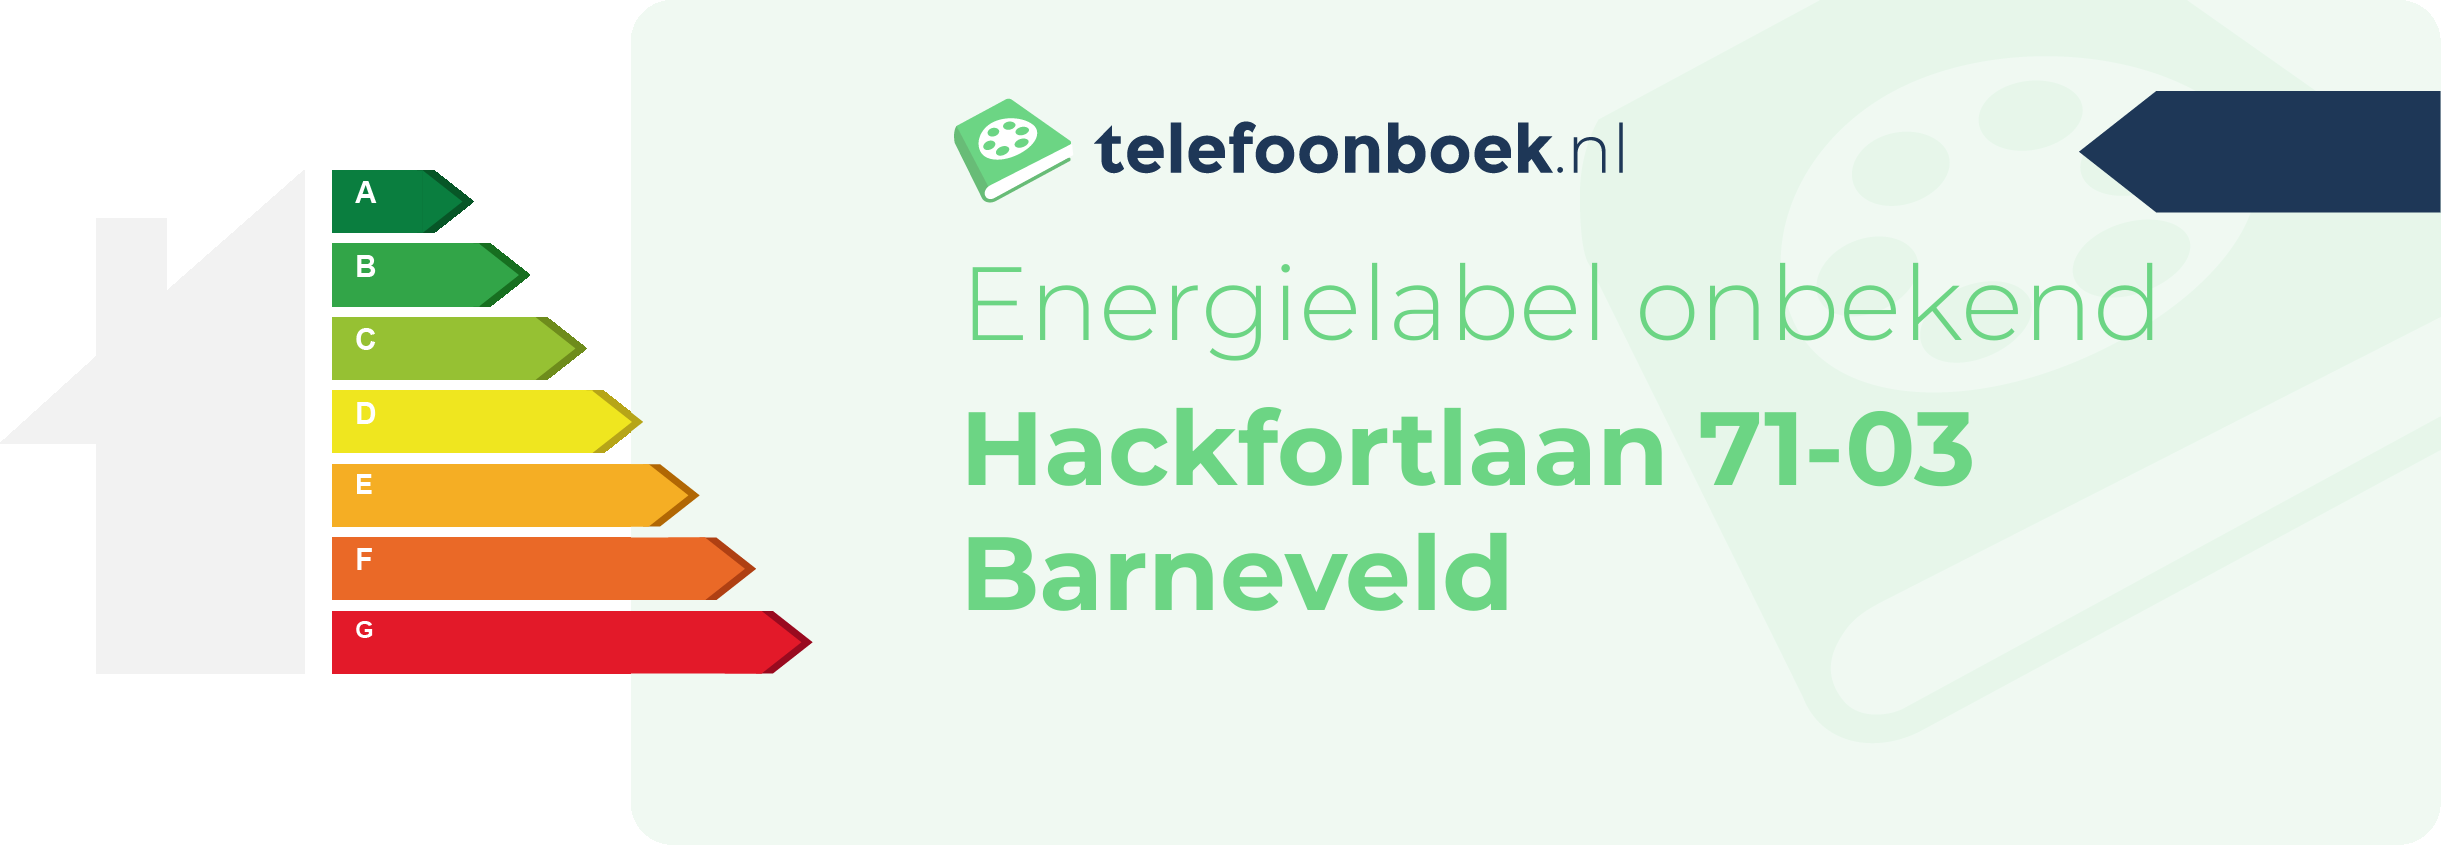 Energielabel Hackfortlaan 71-03 Barneveld